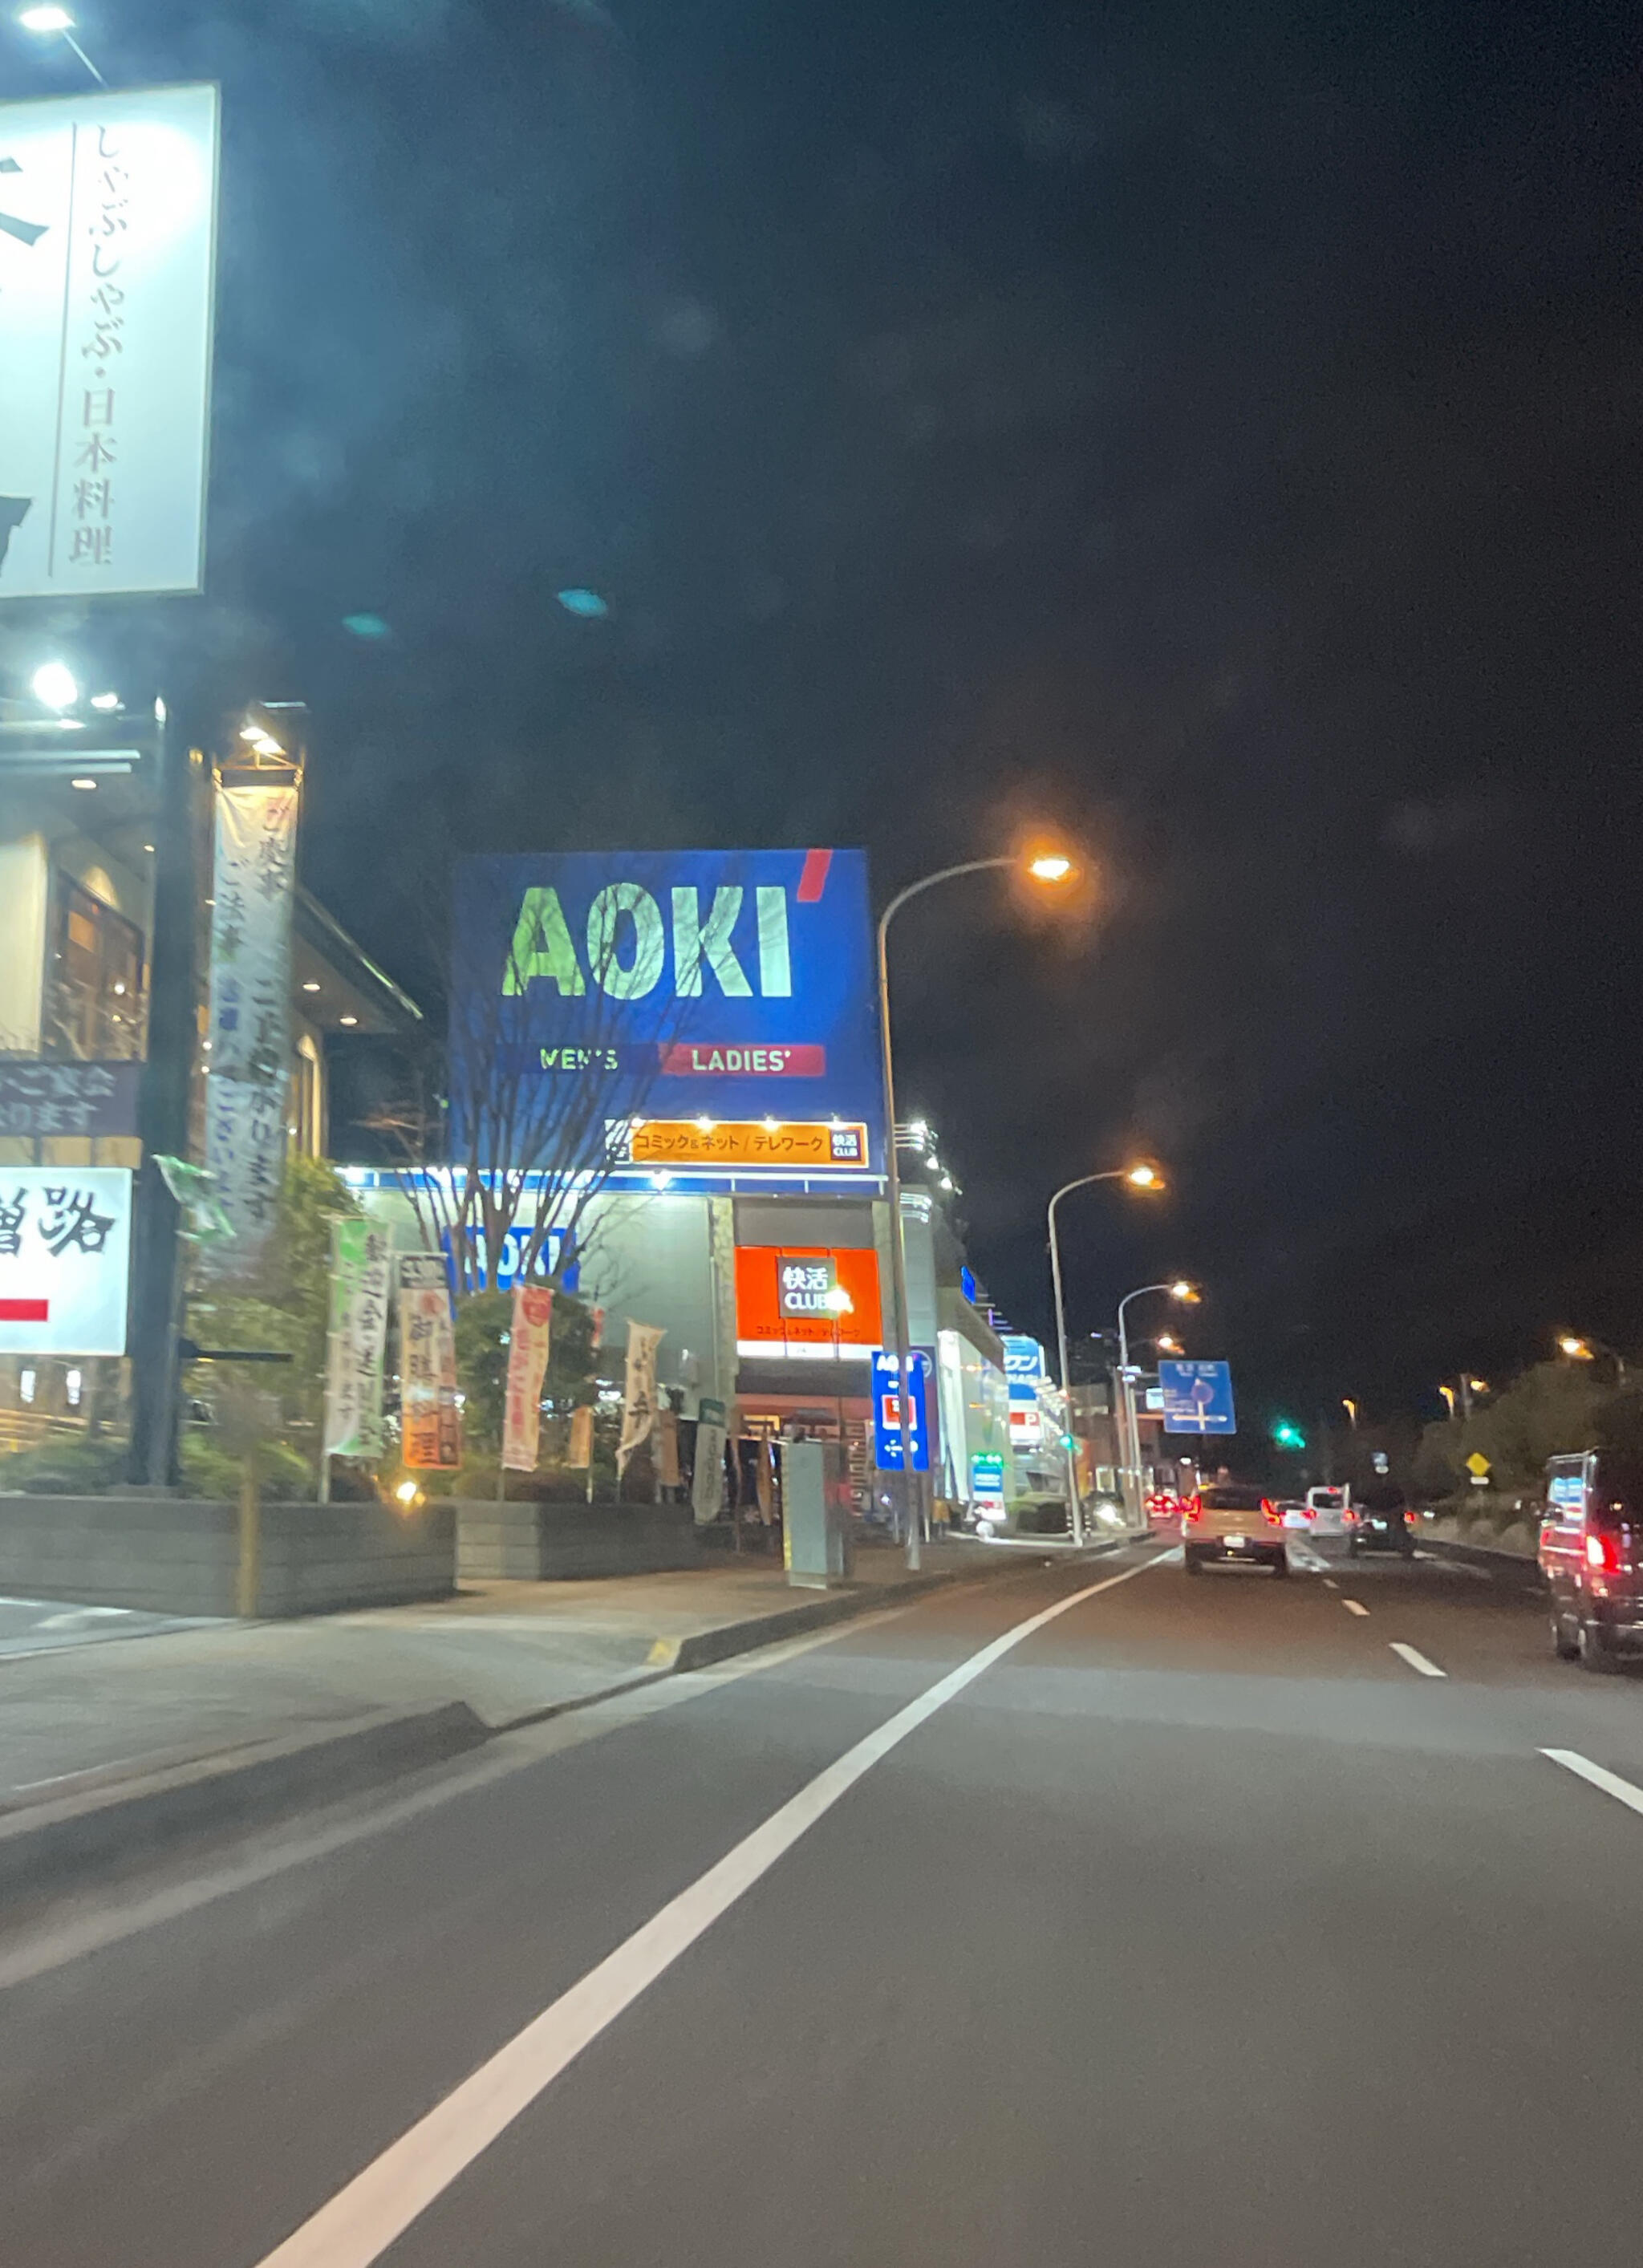 AOKI 幕張店の代表写真2